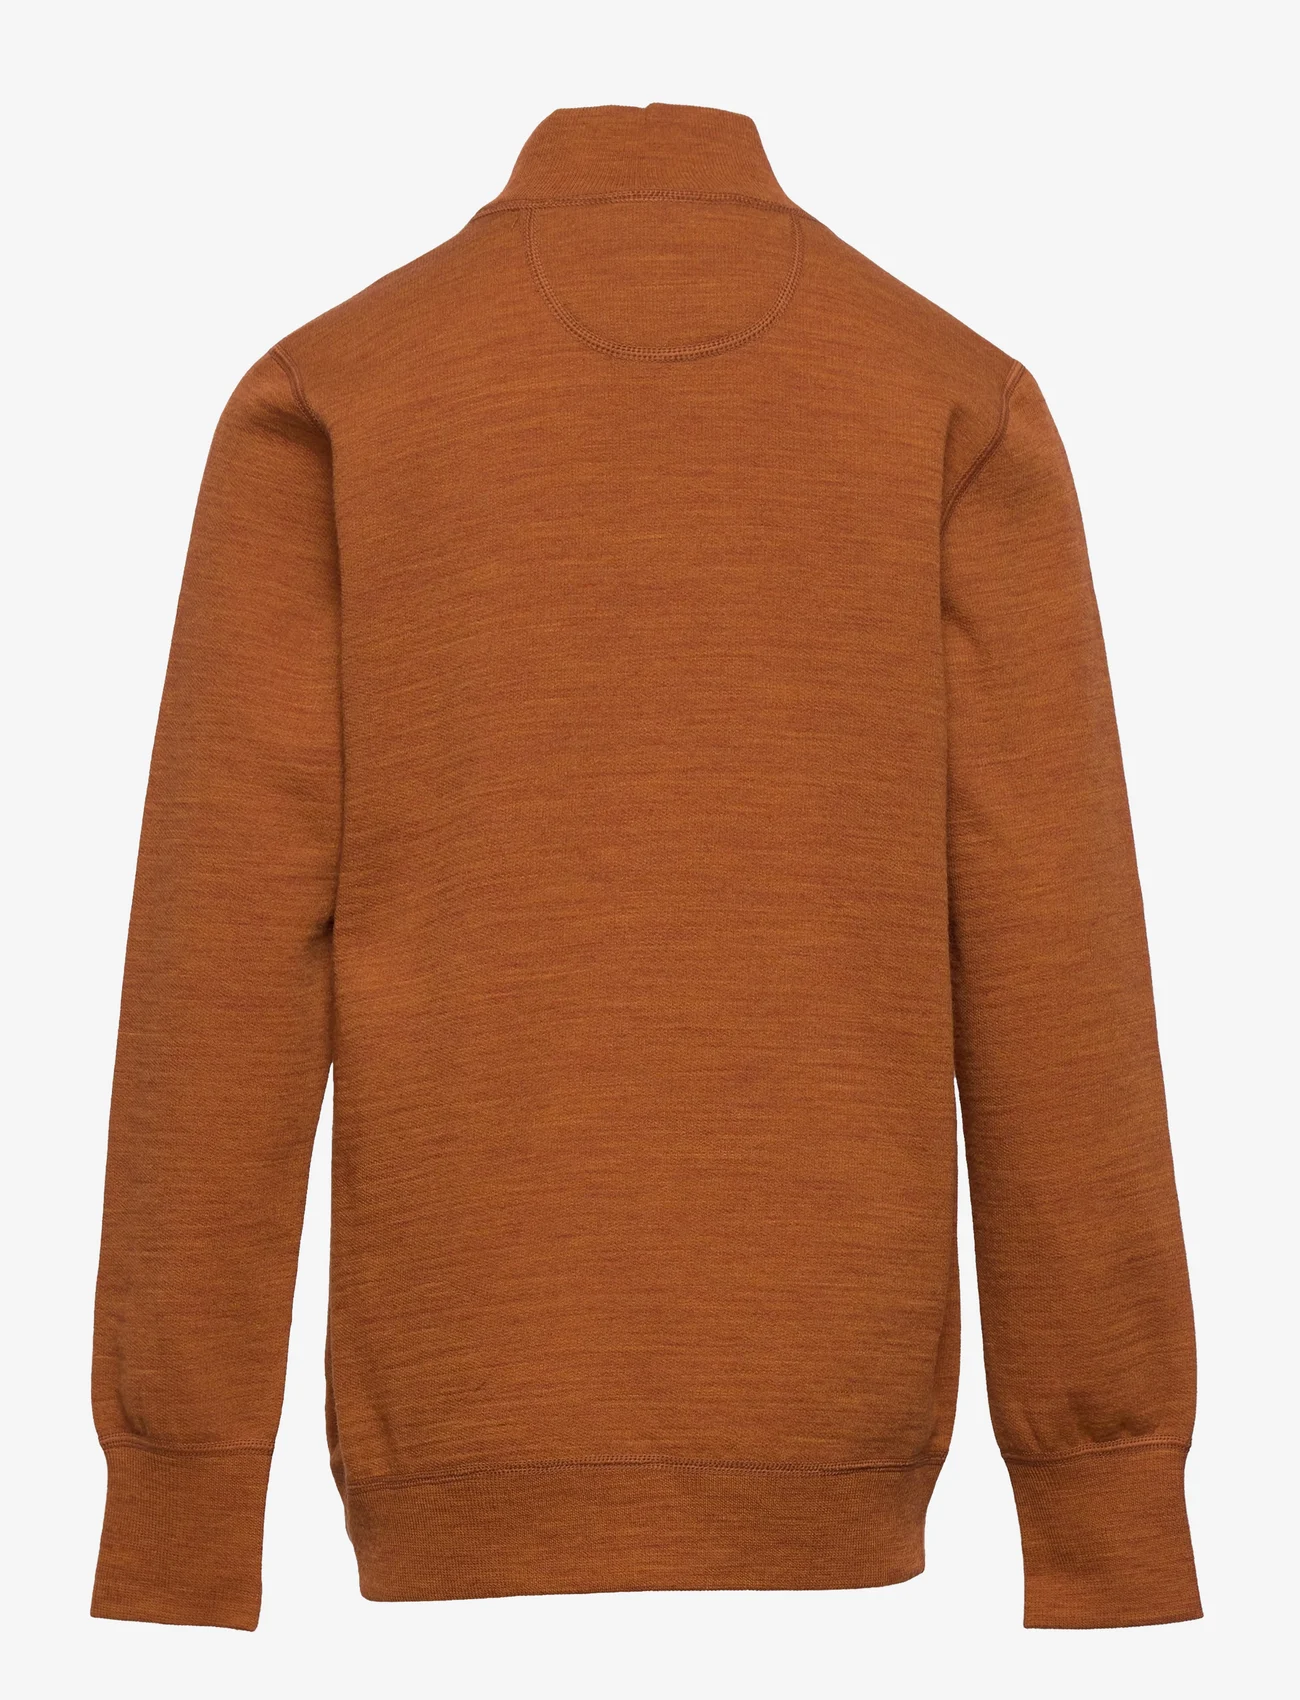 Reima - Sweater, Mahin - svetarit - cinnamon brown - 1